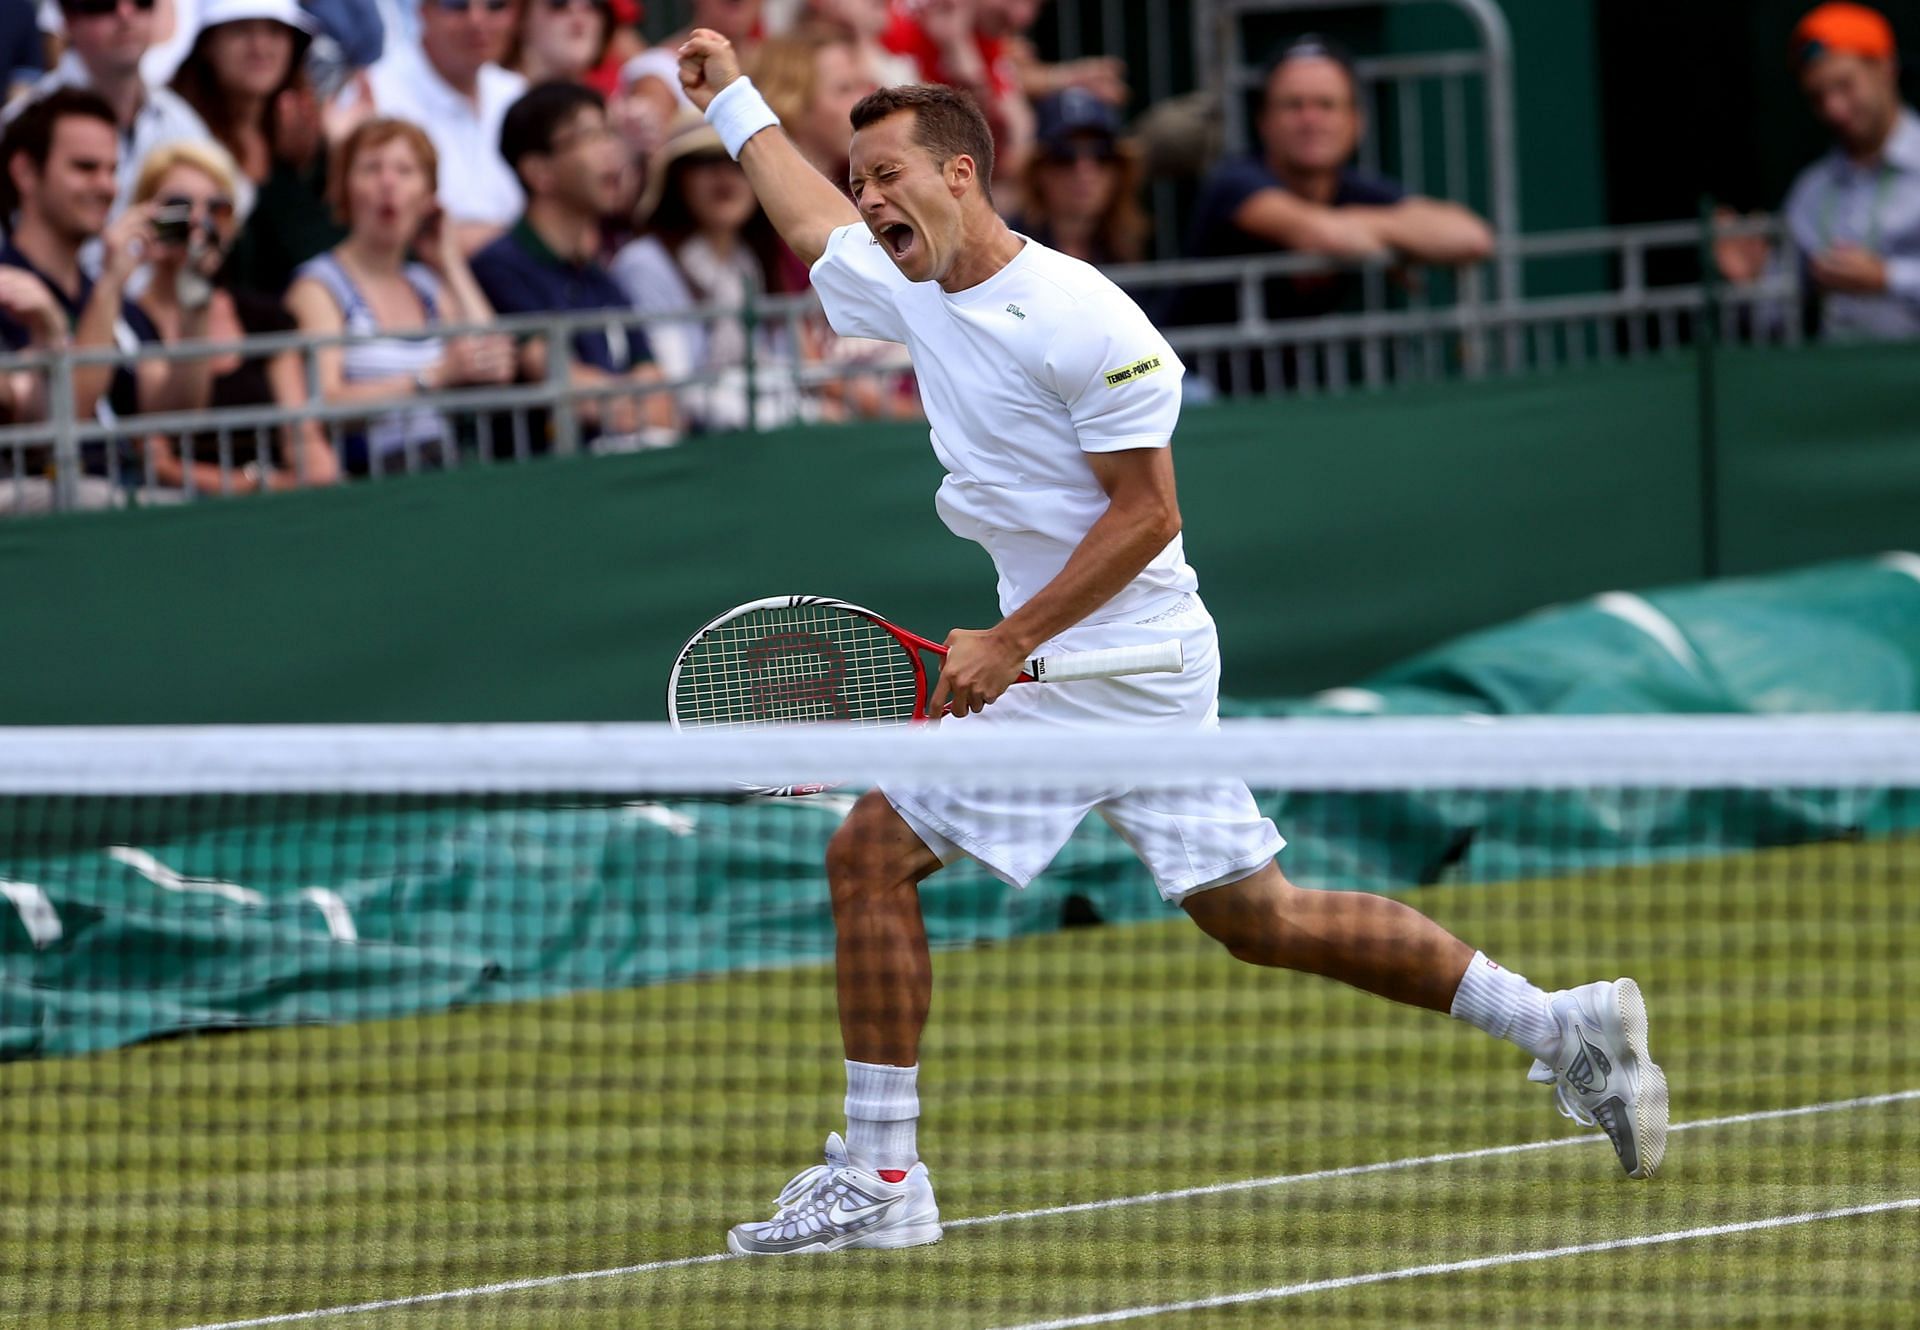 Philipp Kohlshcreiber made the Wimbledon quarterfinals in 2012.